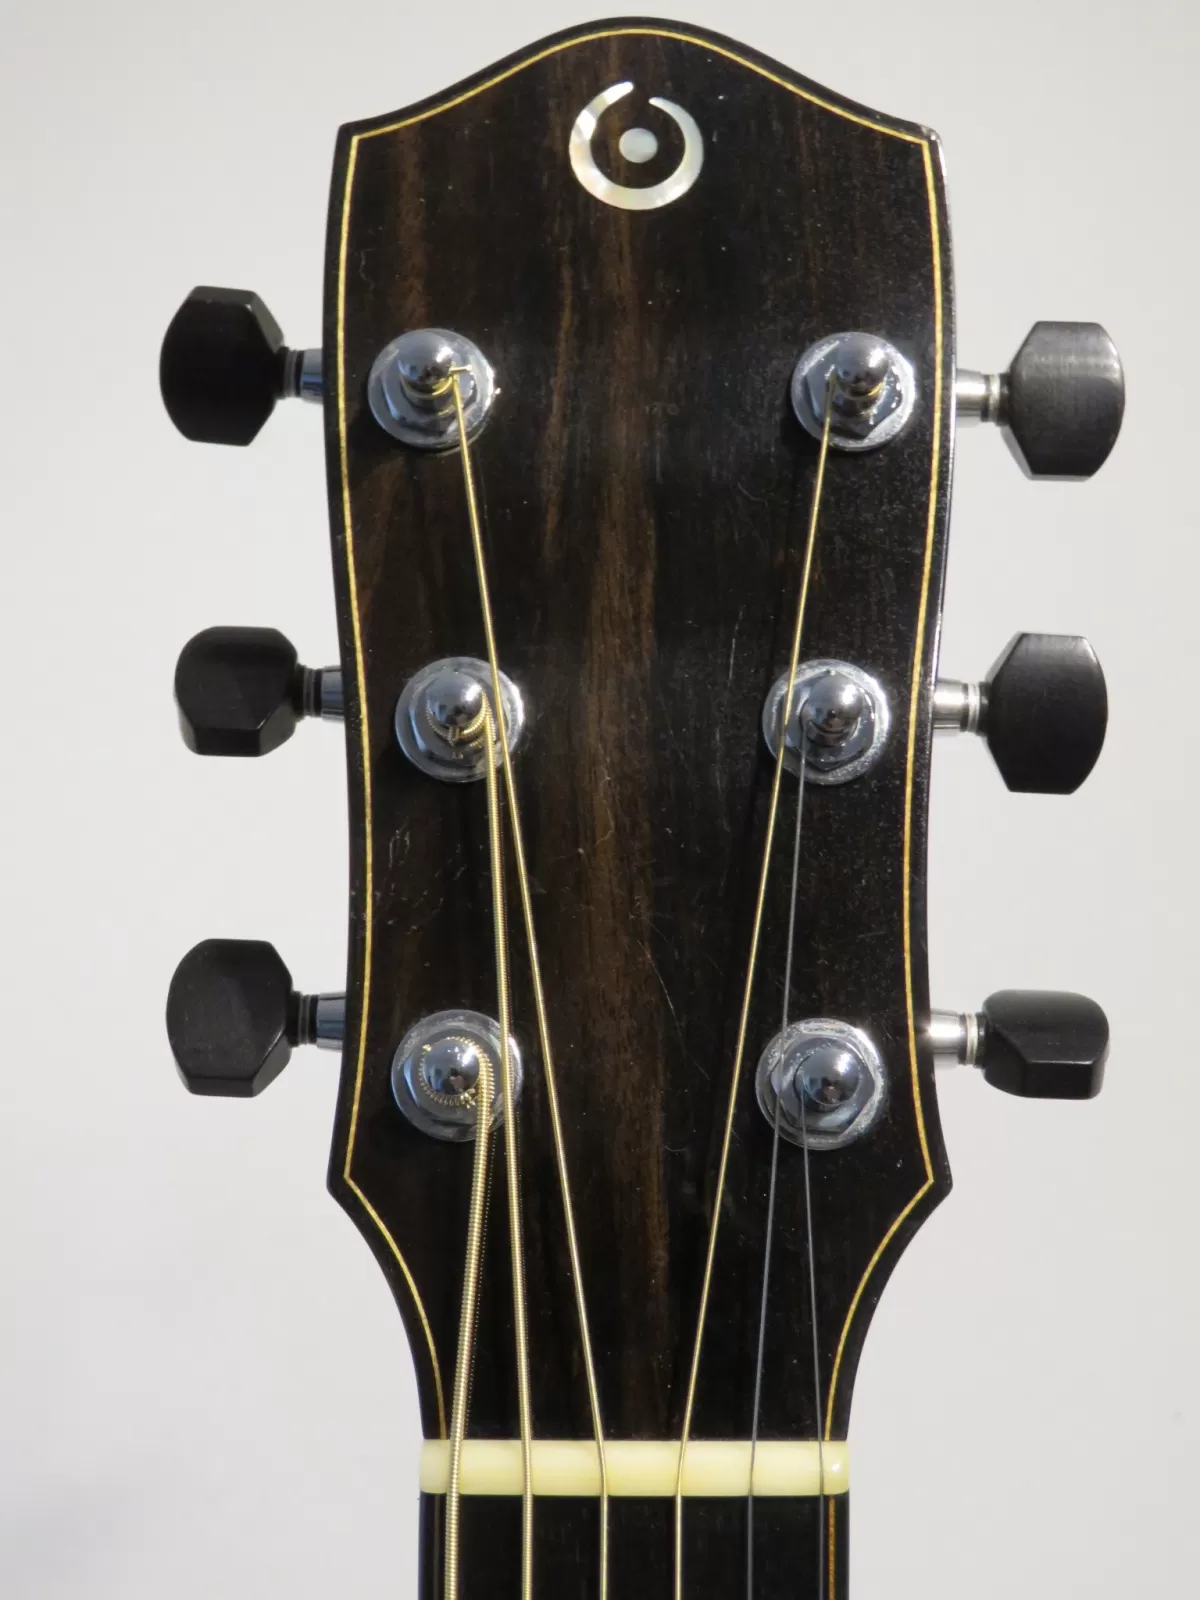 2013 Richard Osborne Damselfly Electro Acoustic Guitar with Hard Case